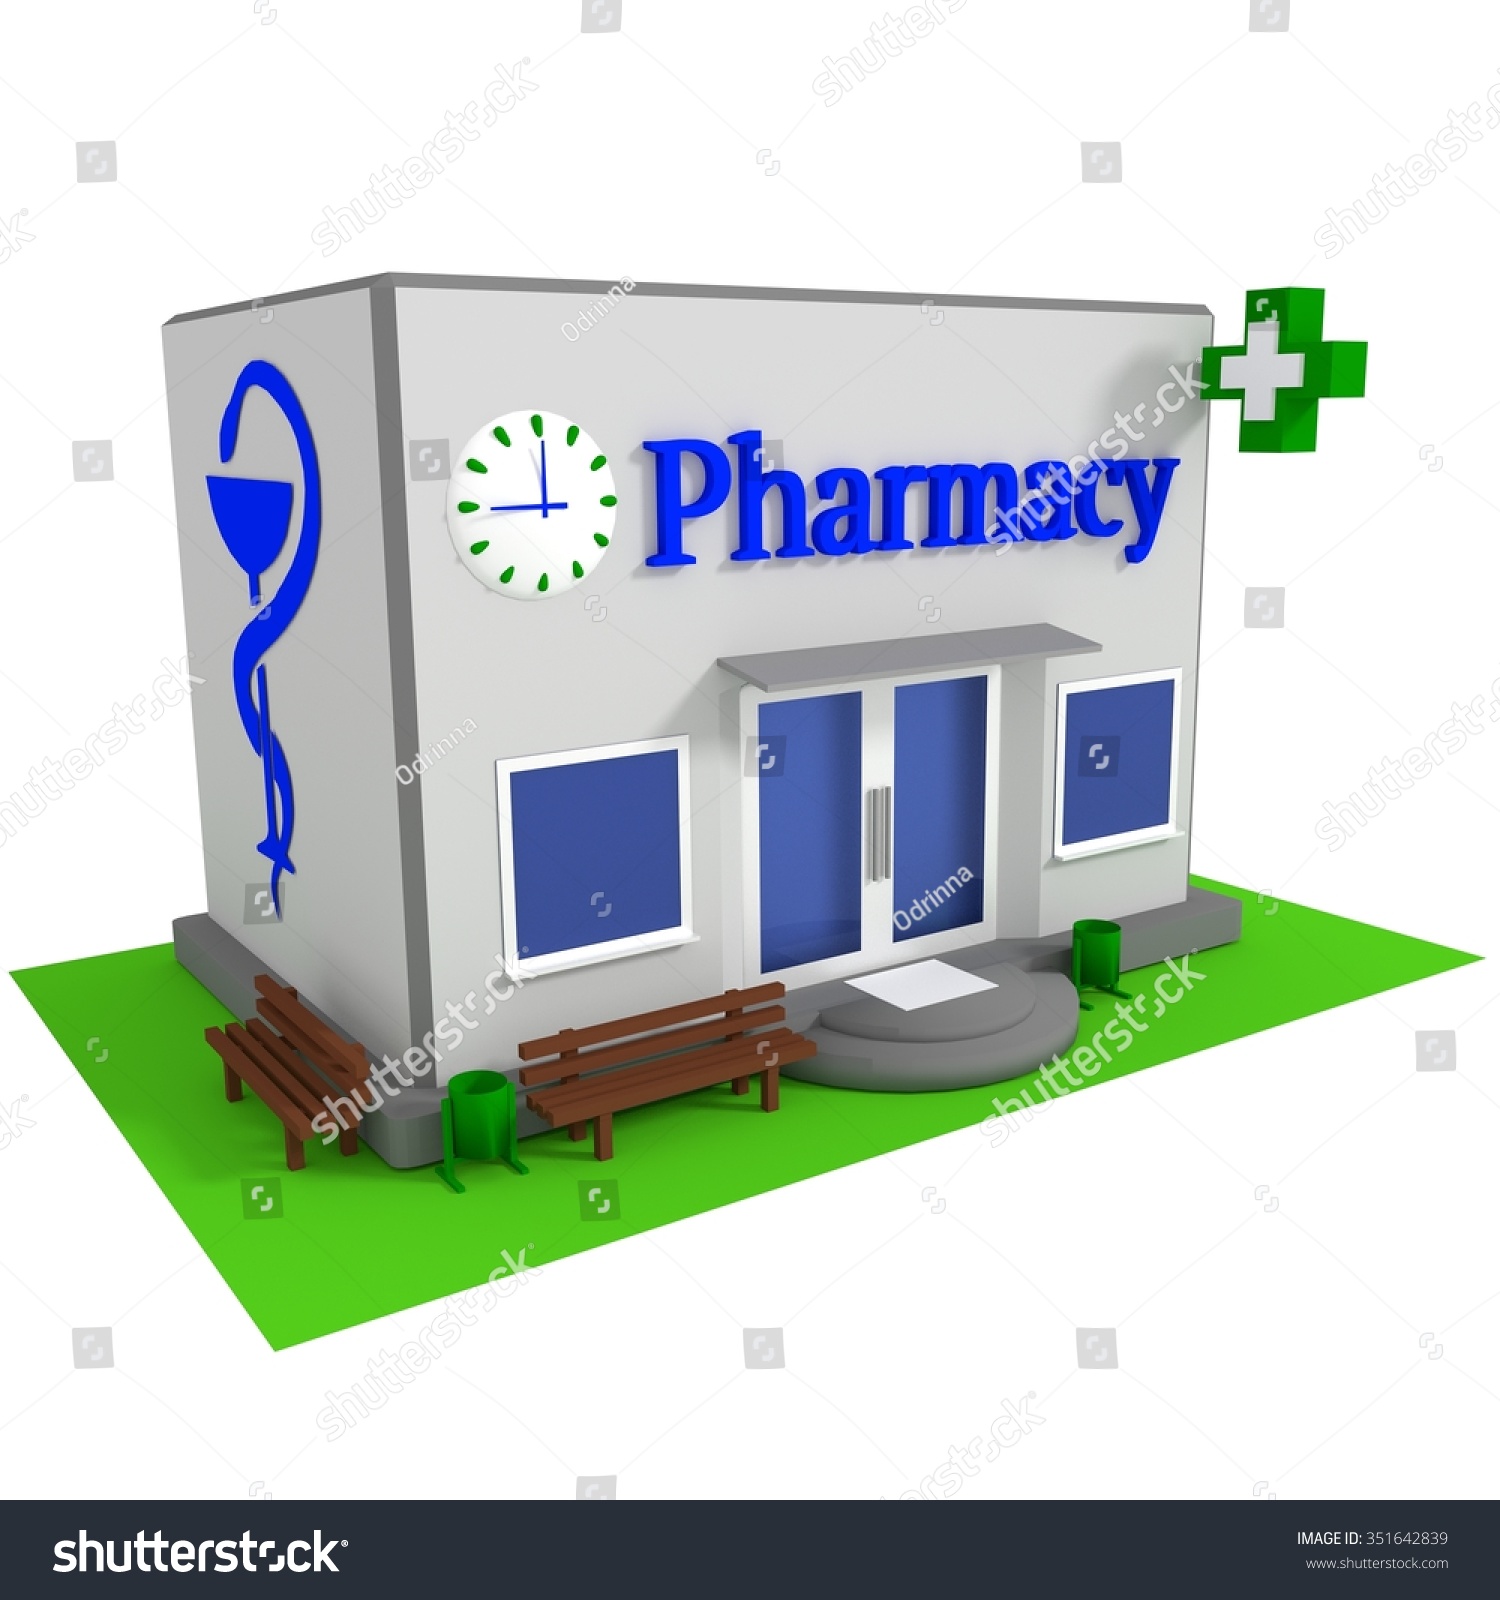 pharmacy building clipart - photo #34